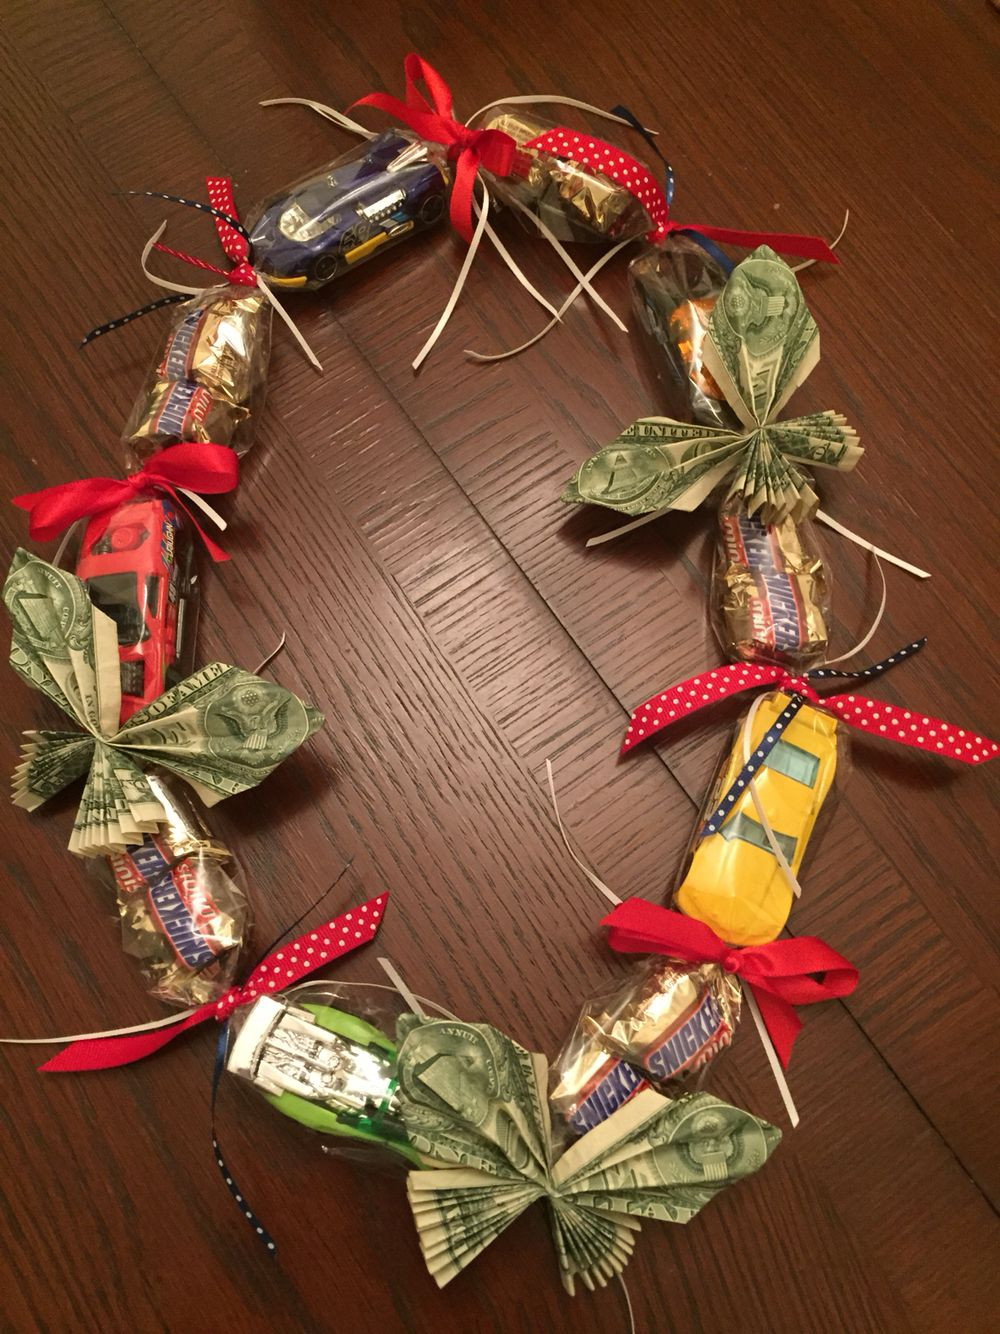 Kindergarten Graduation Gift Ideas Boys
 Toy cars candy and money graduation lei for my godson s